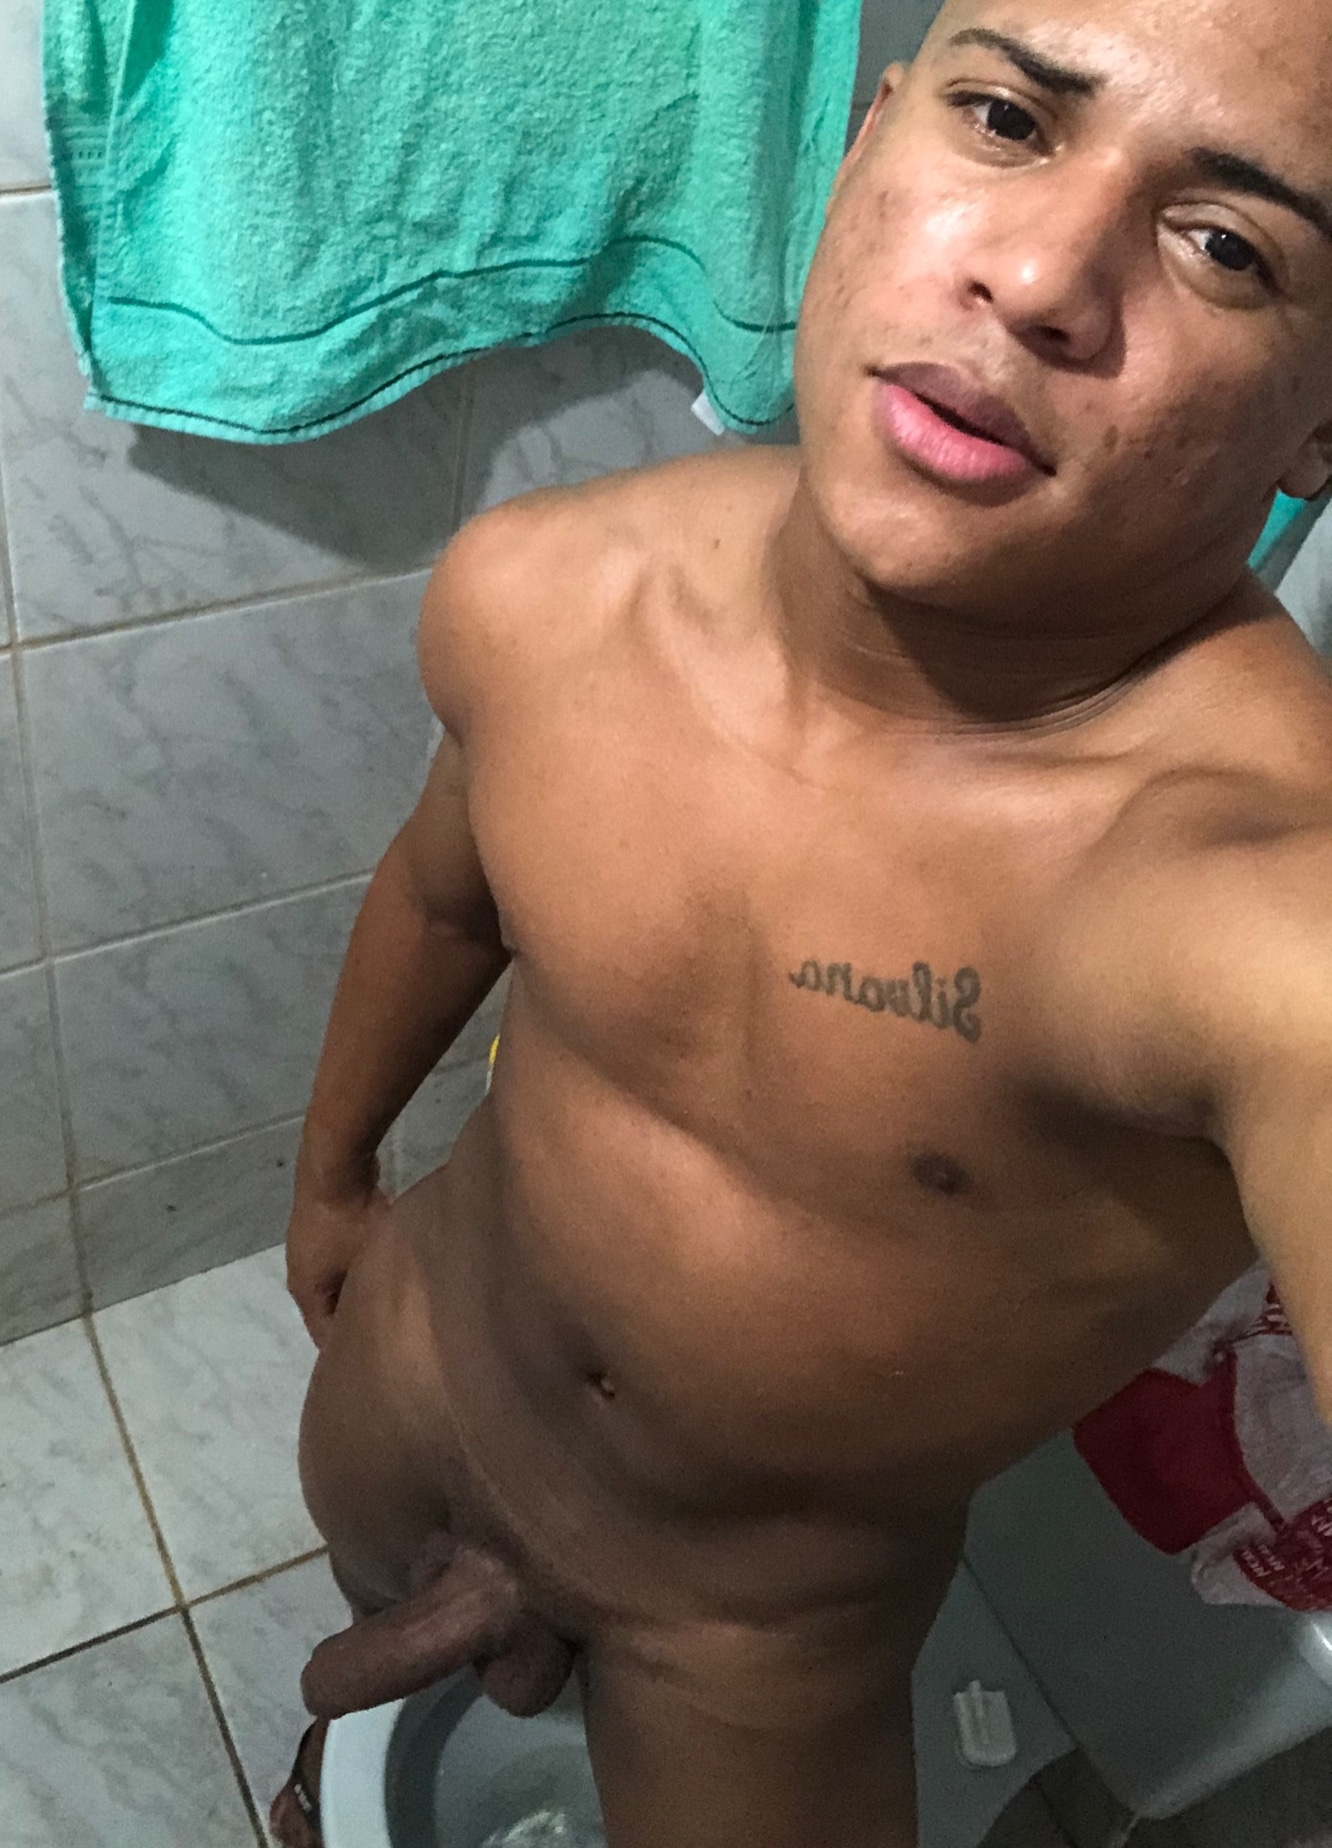 Nude Hispanic Selfie - Nude guy taking a selfie - Nude Latino Boys